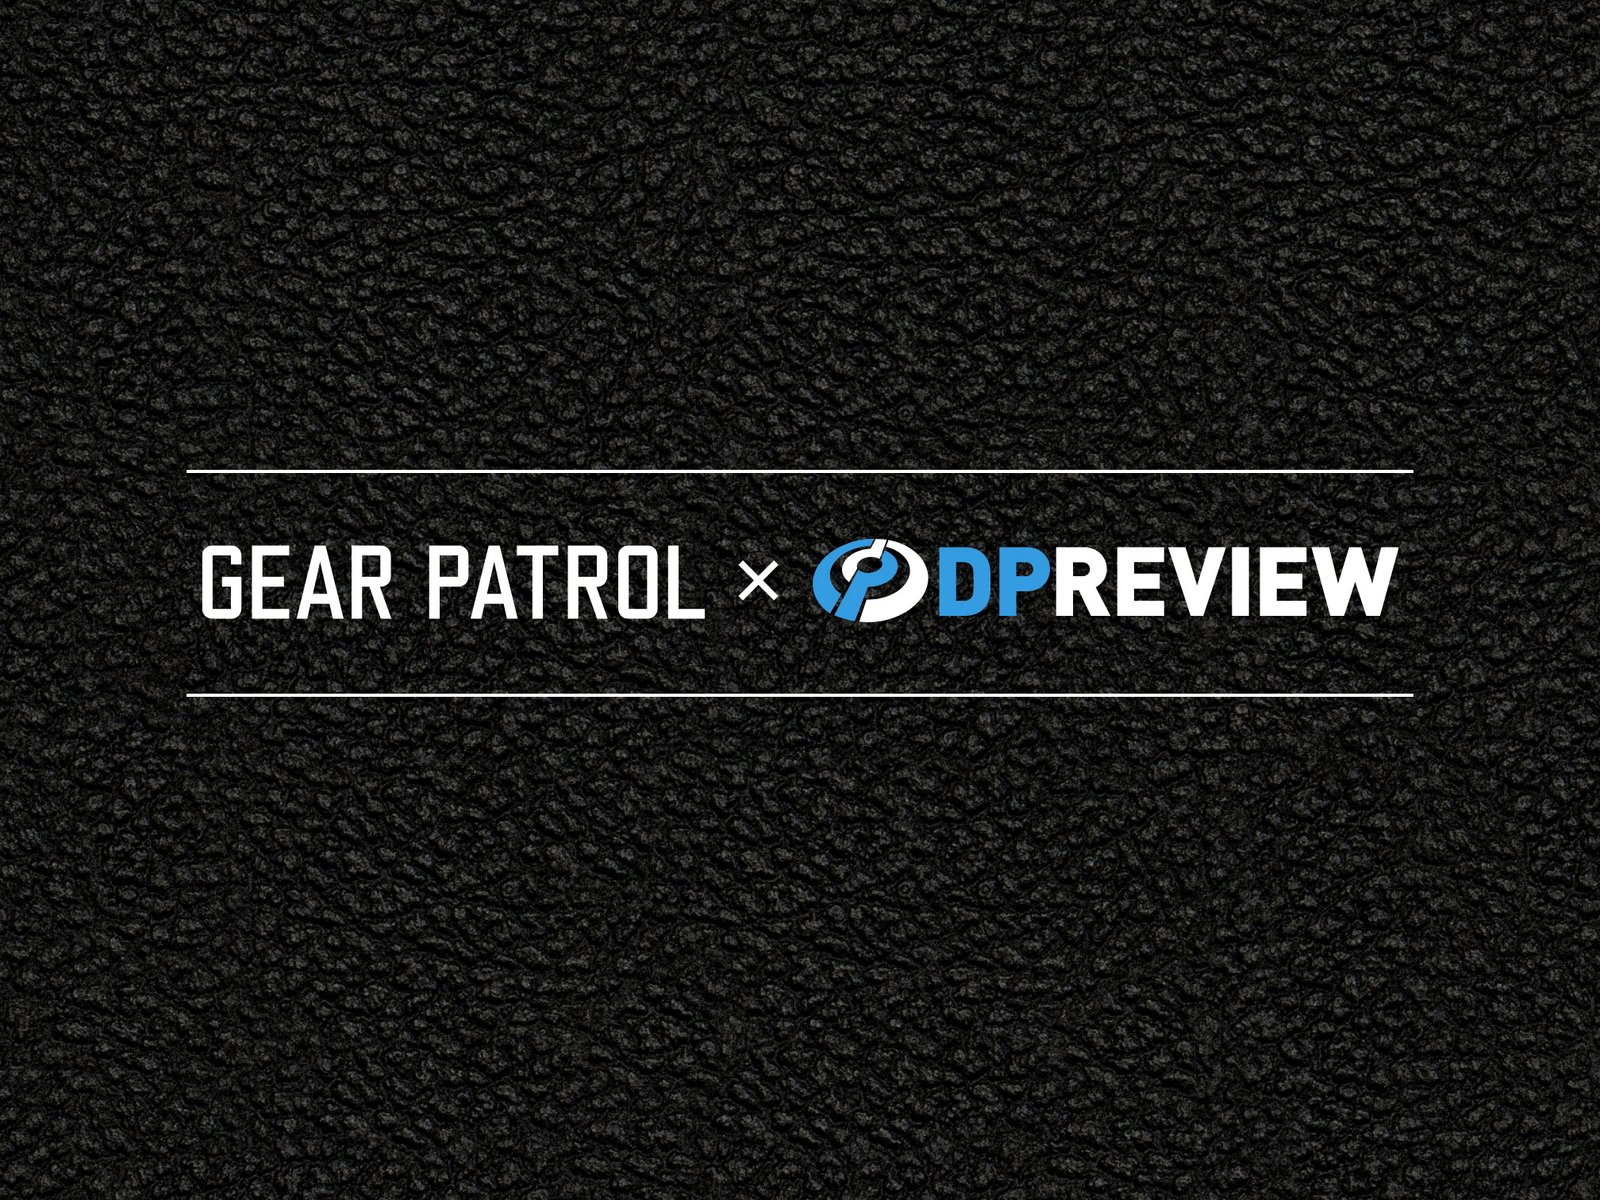 DPReview x Gear Patrol